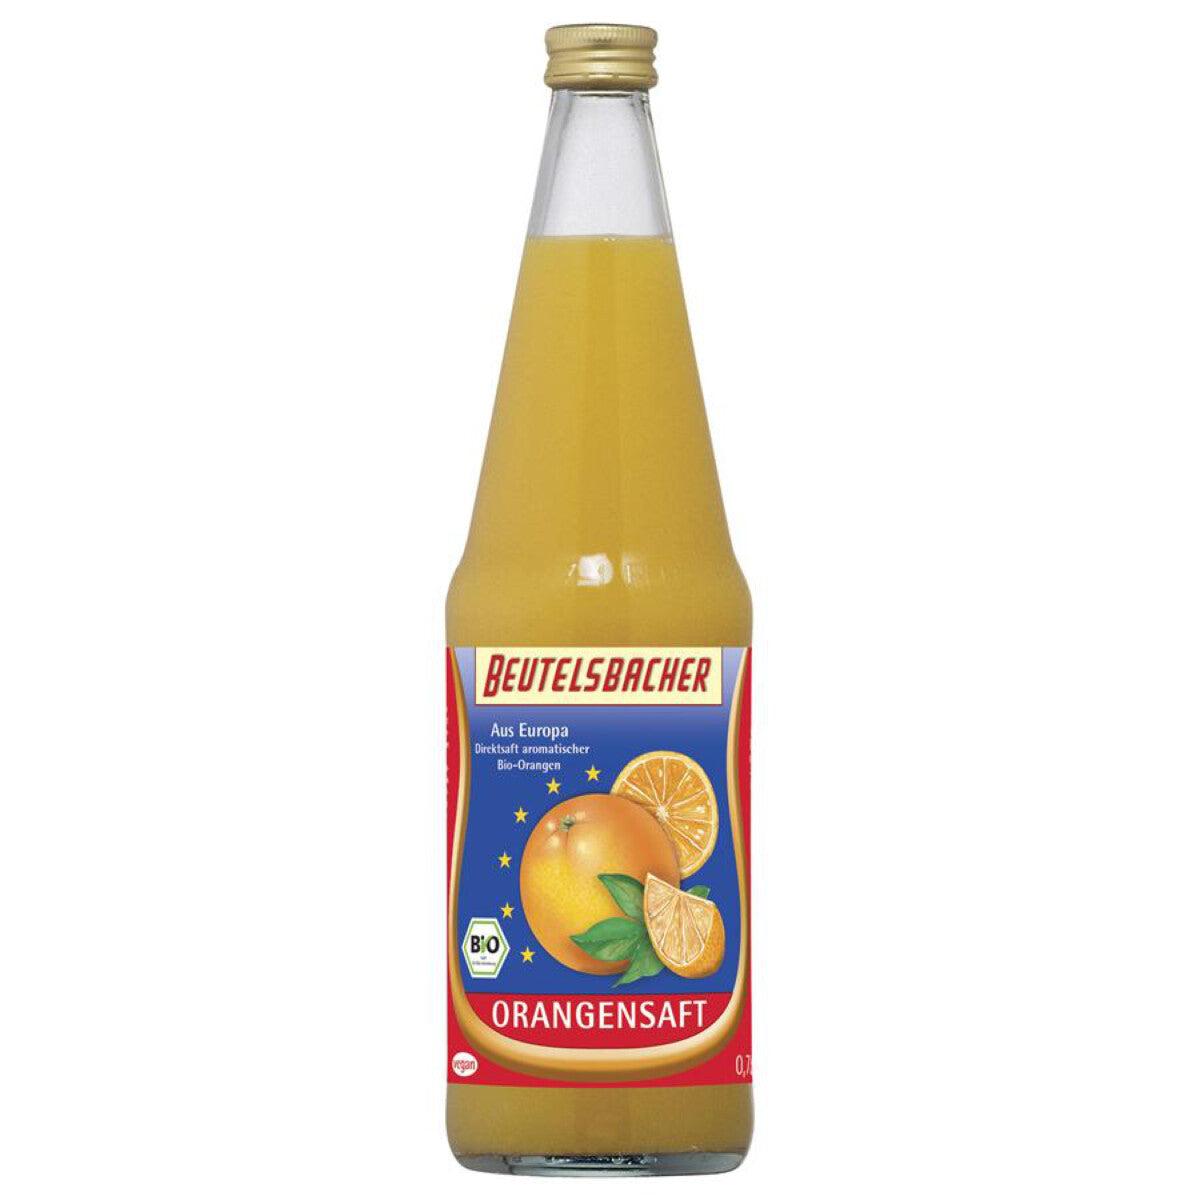 BEUTELSBACHER Orangensaft aus Europa - 0,7 l